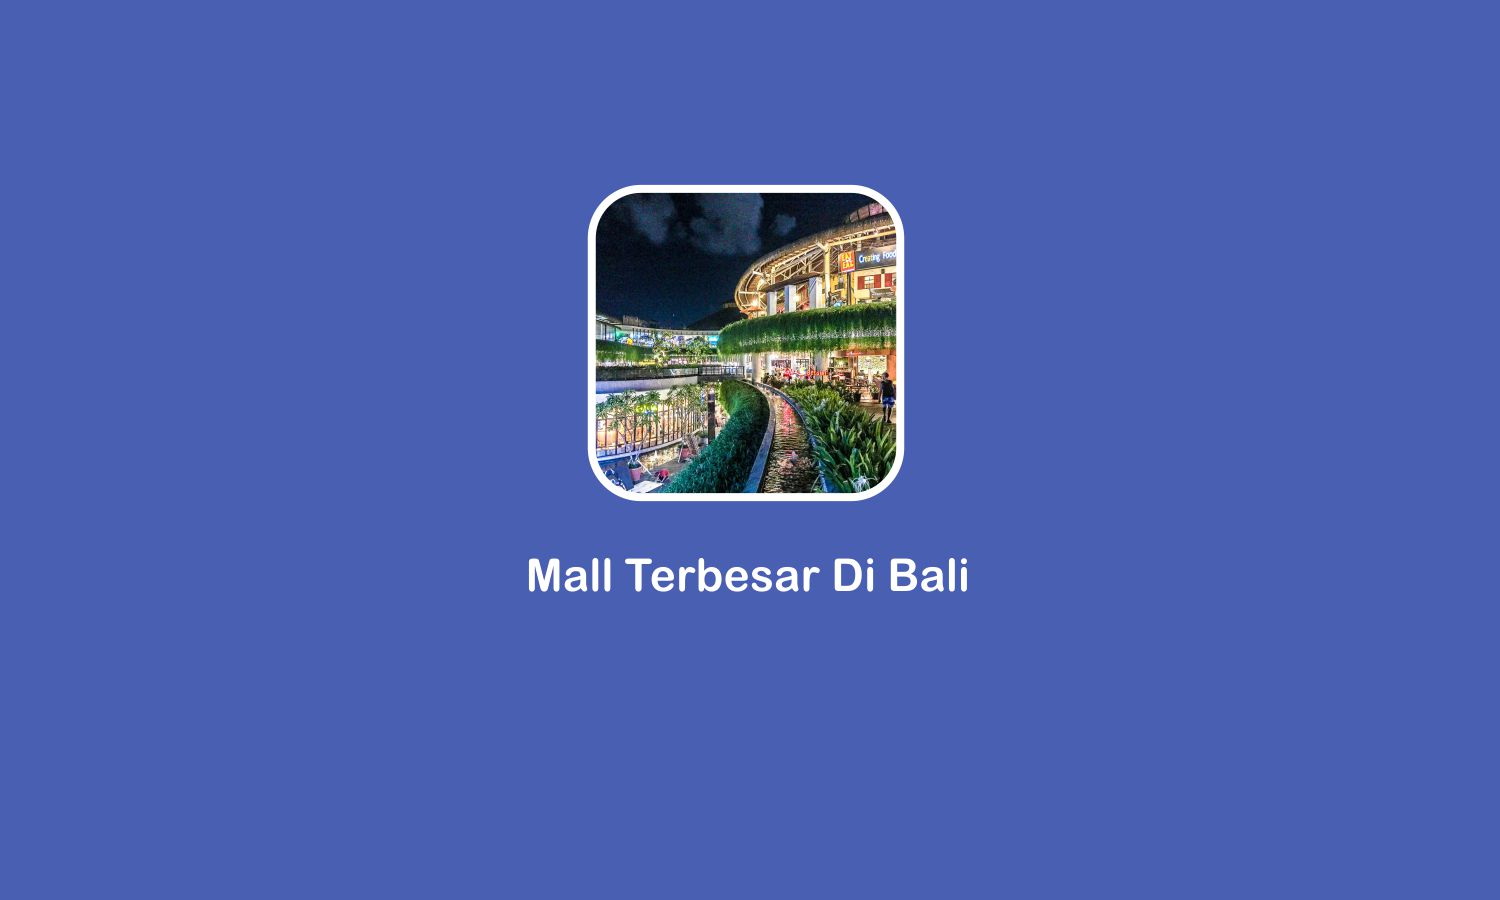 Mall Terbesar Di Bali